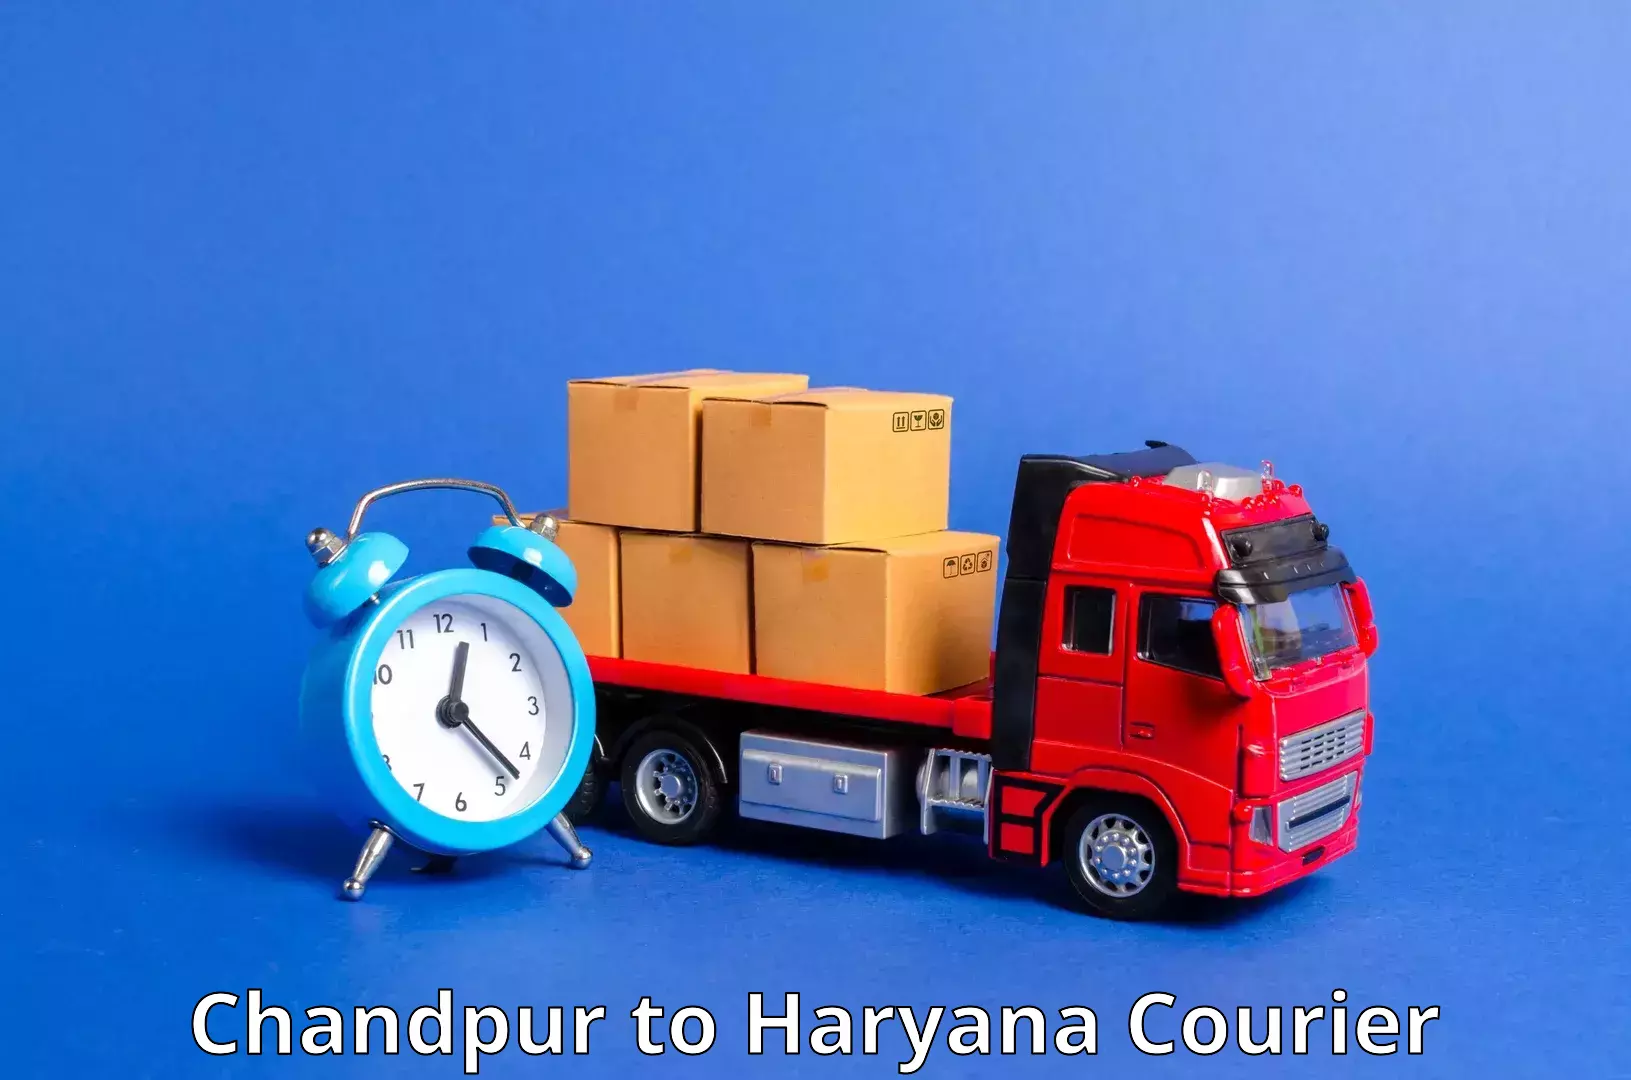 Smart shipping technology Chandpur to Sonipat